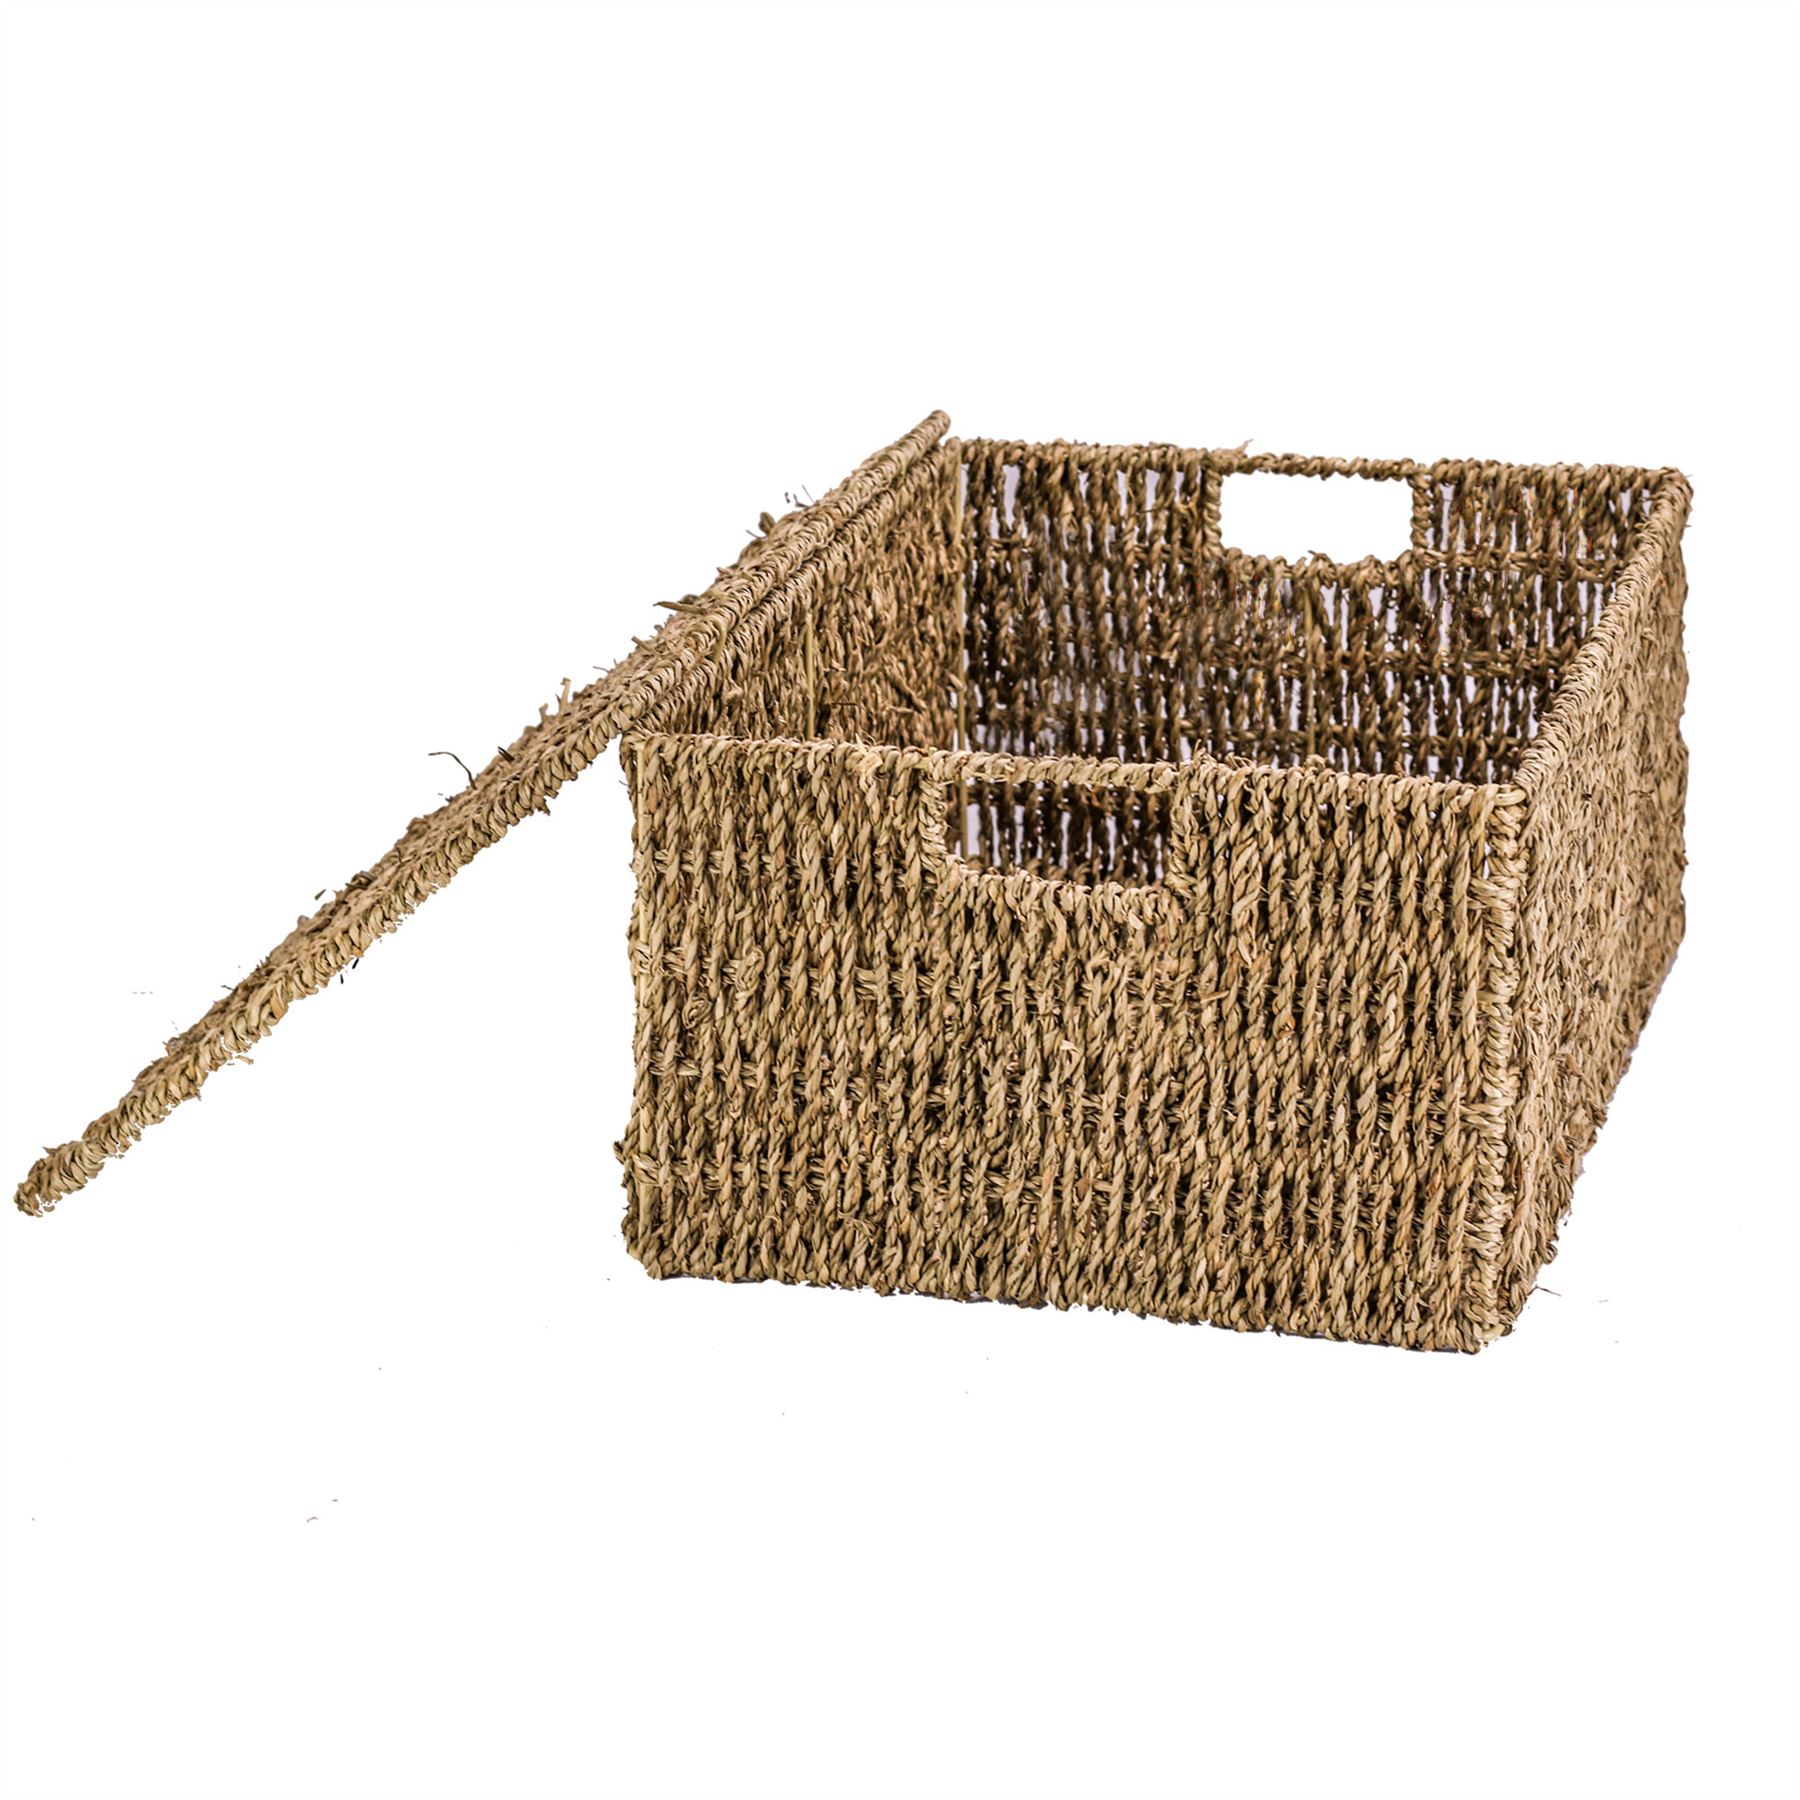 Seagrass Storage Basket with Lid | M&W